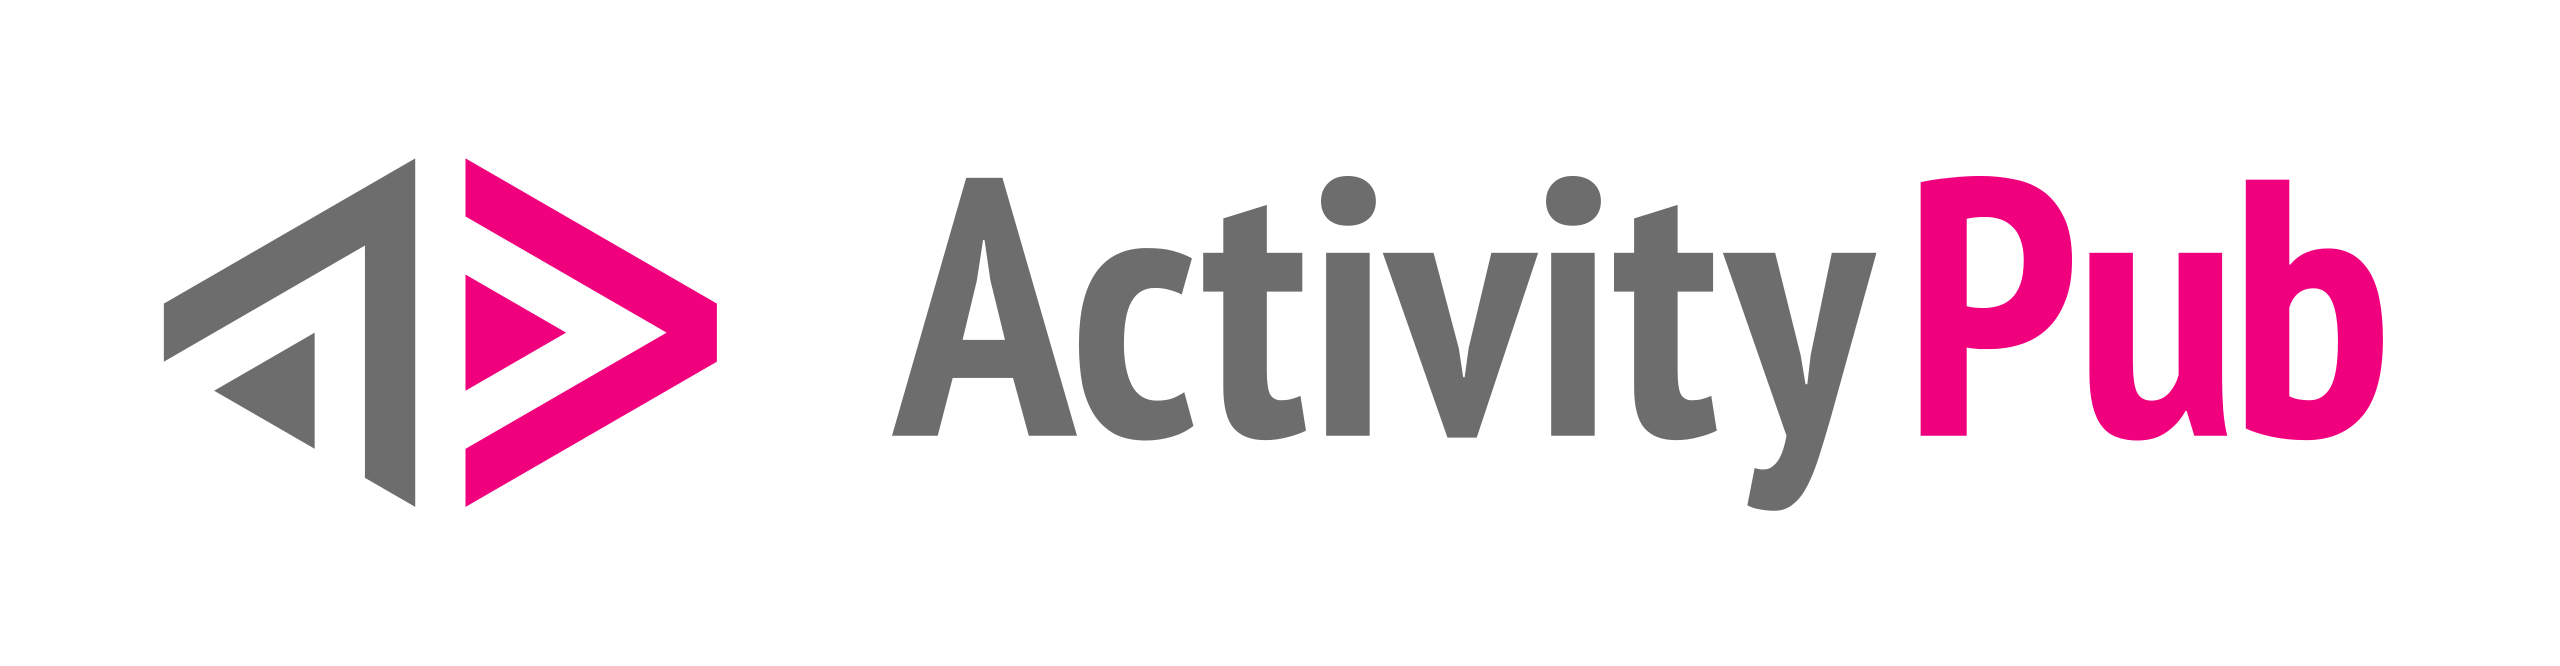 Activity Pub logo